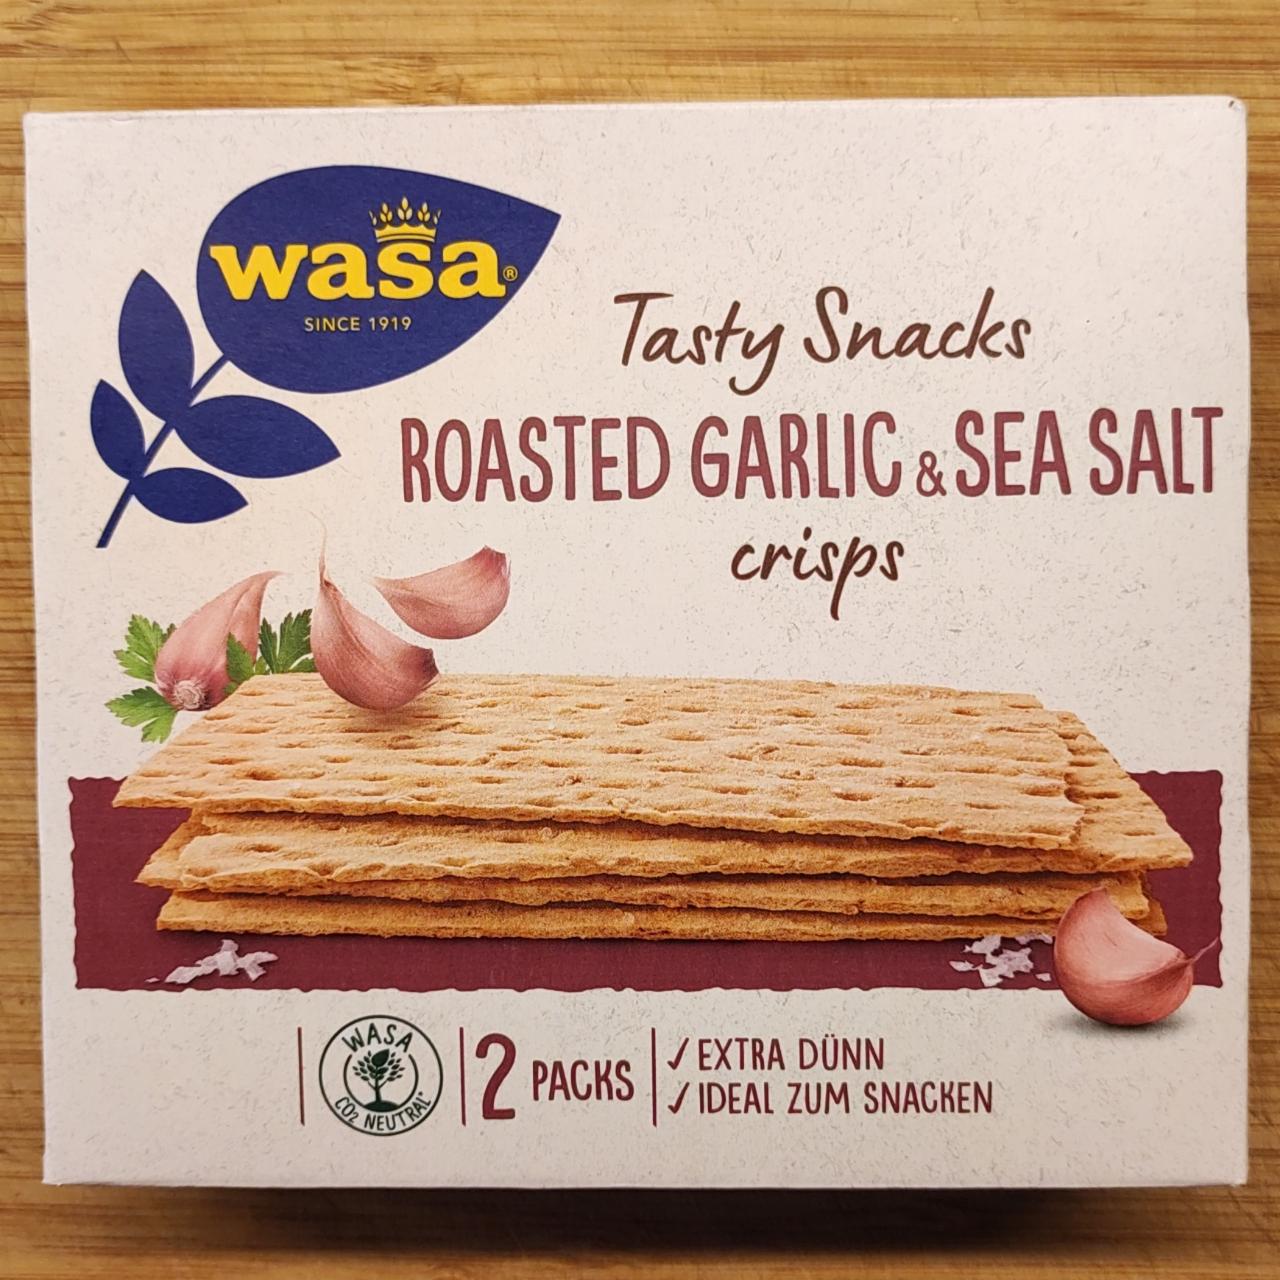 Fotografie - Tasty Snacks Roasted garlic & sea salt crisps Wasa